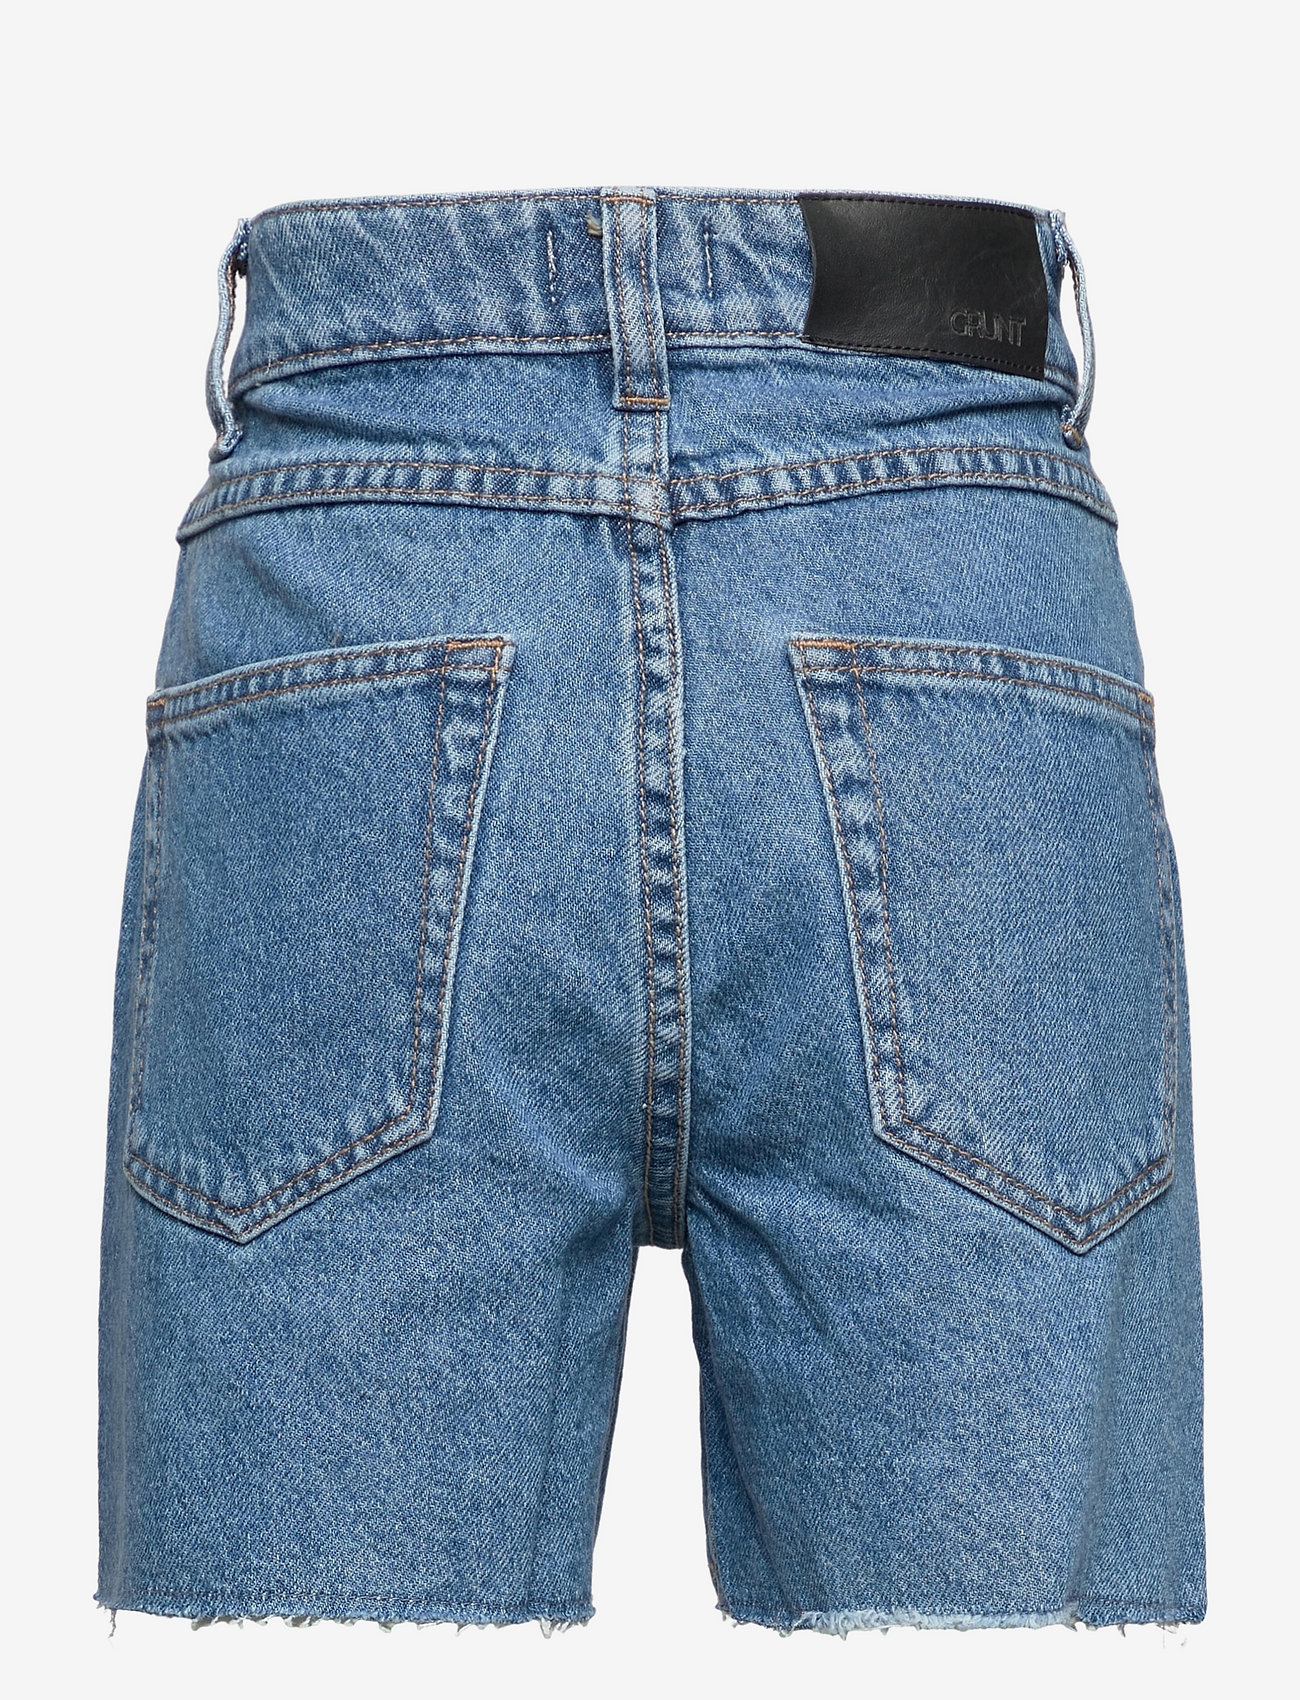 Grunt - 90s Shorts Premium Blue - jeansshorts - premium blue - 1